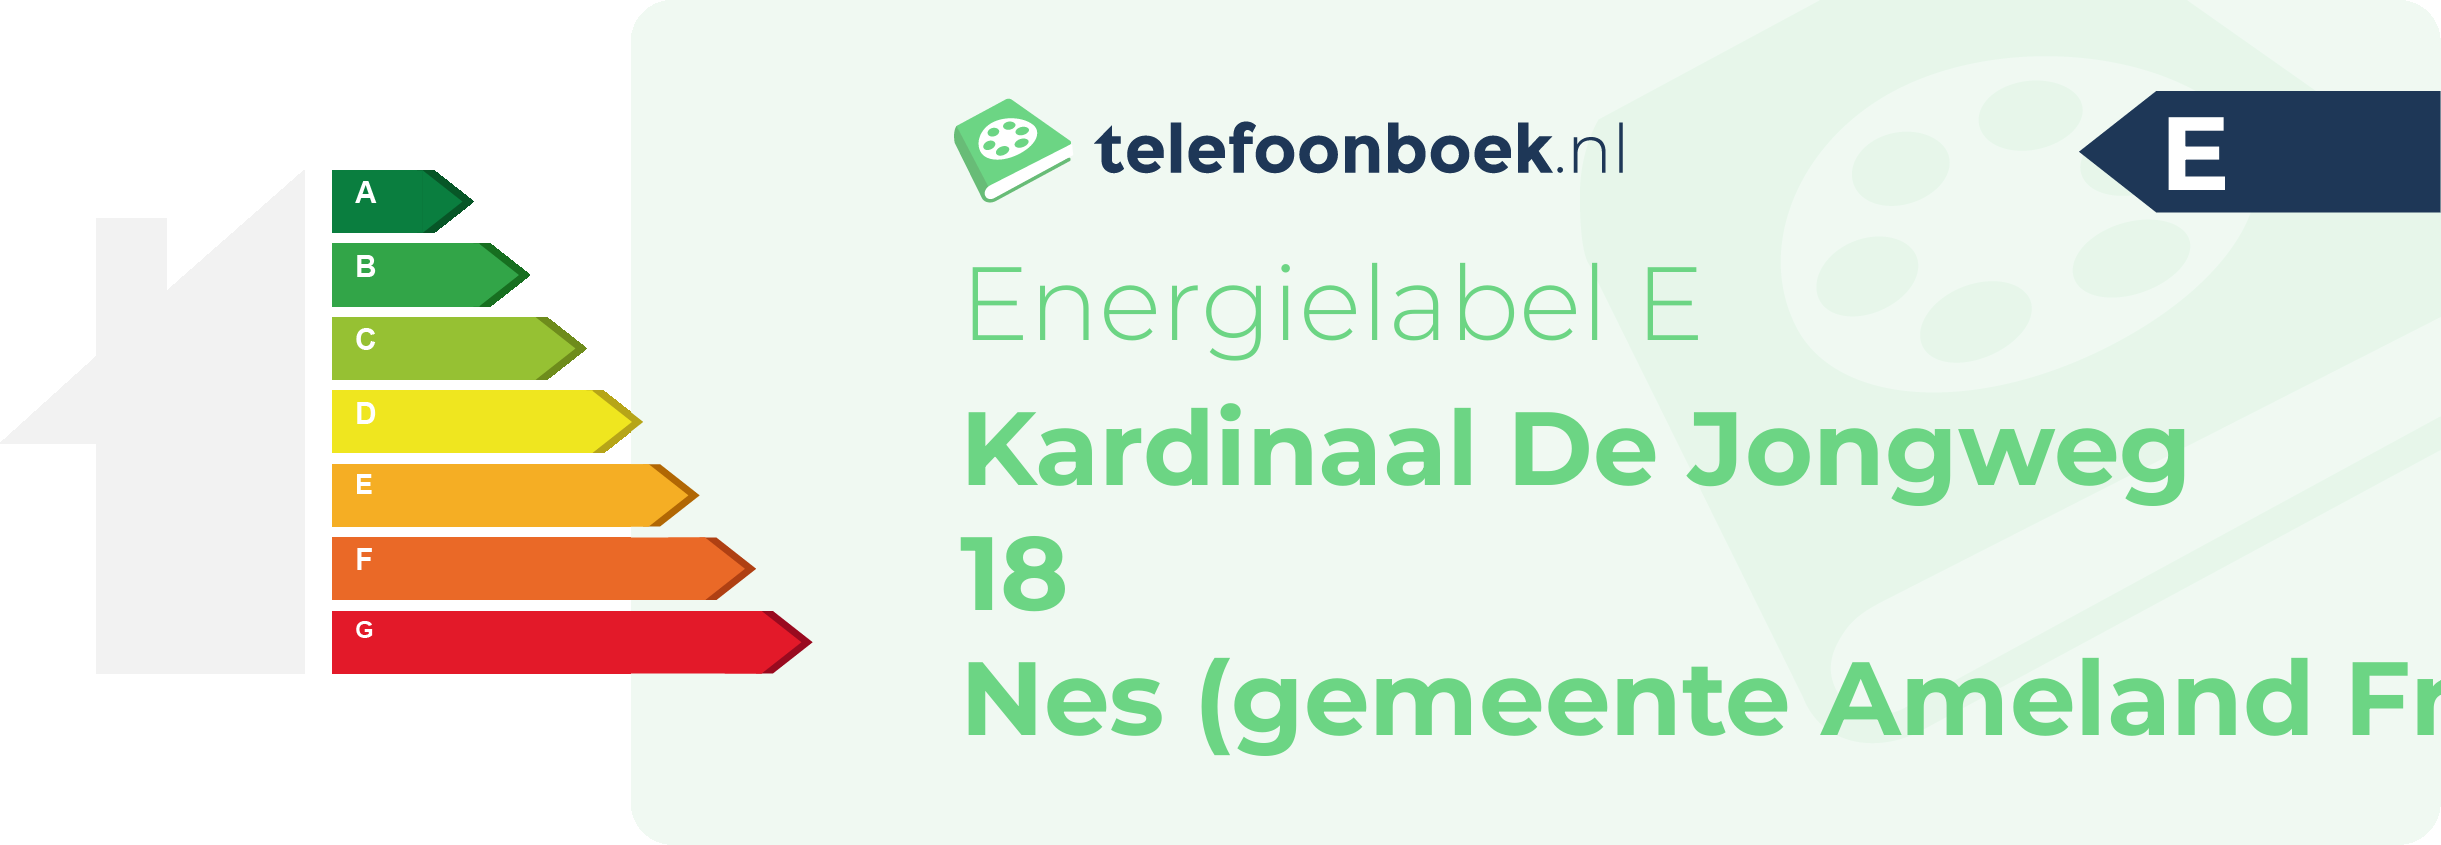 Energielabel Kardinaal De Jongweg 18 Nes (gemeente Ameland Friesland)